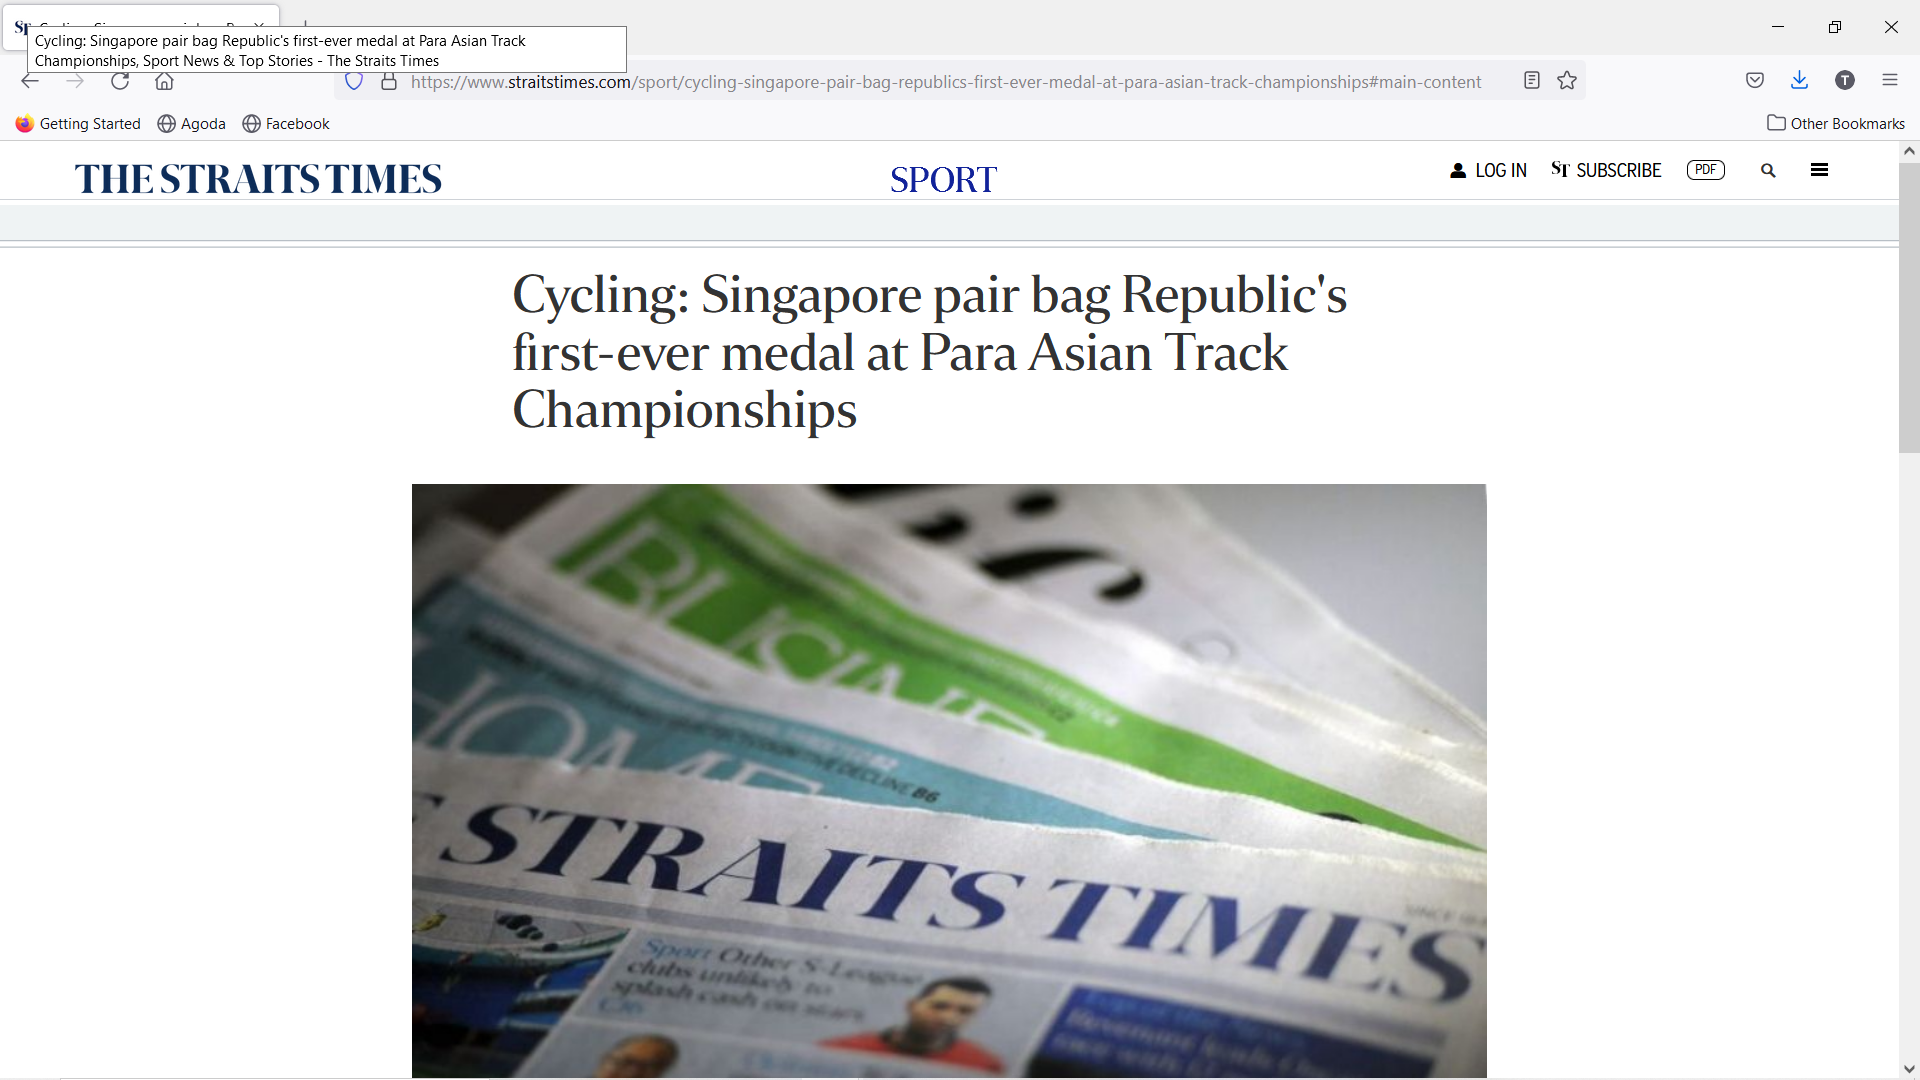 Cycling: Singapore pair bag Republic's first-ever medal at Para Asian Track Championships Screenshot